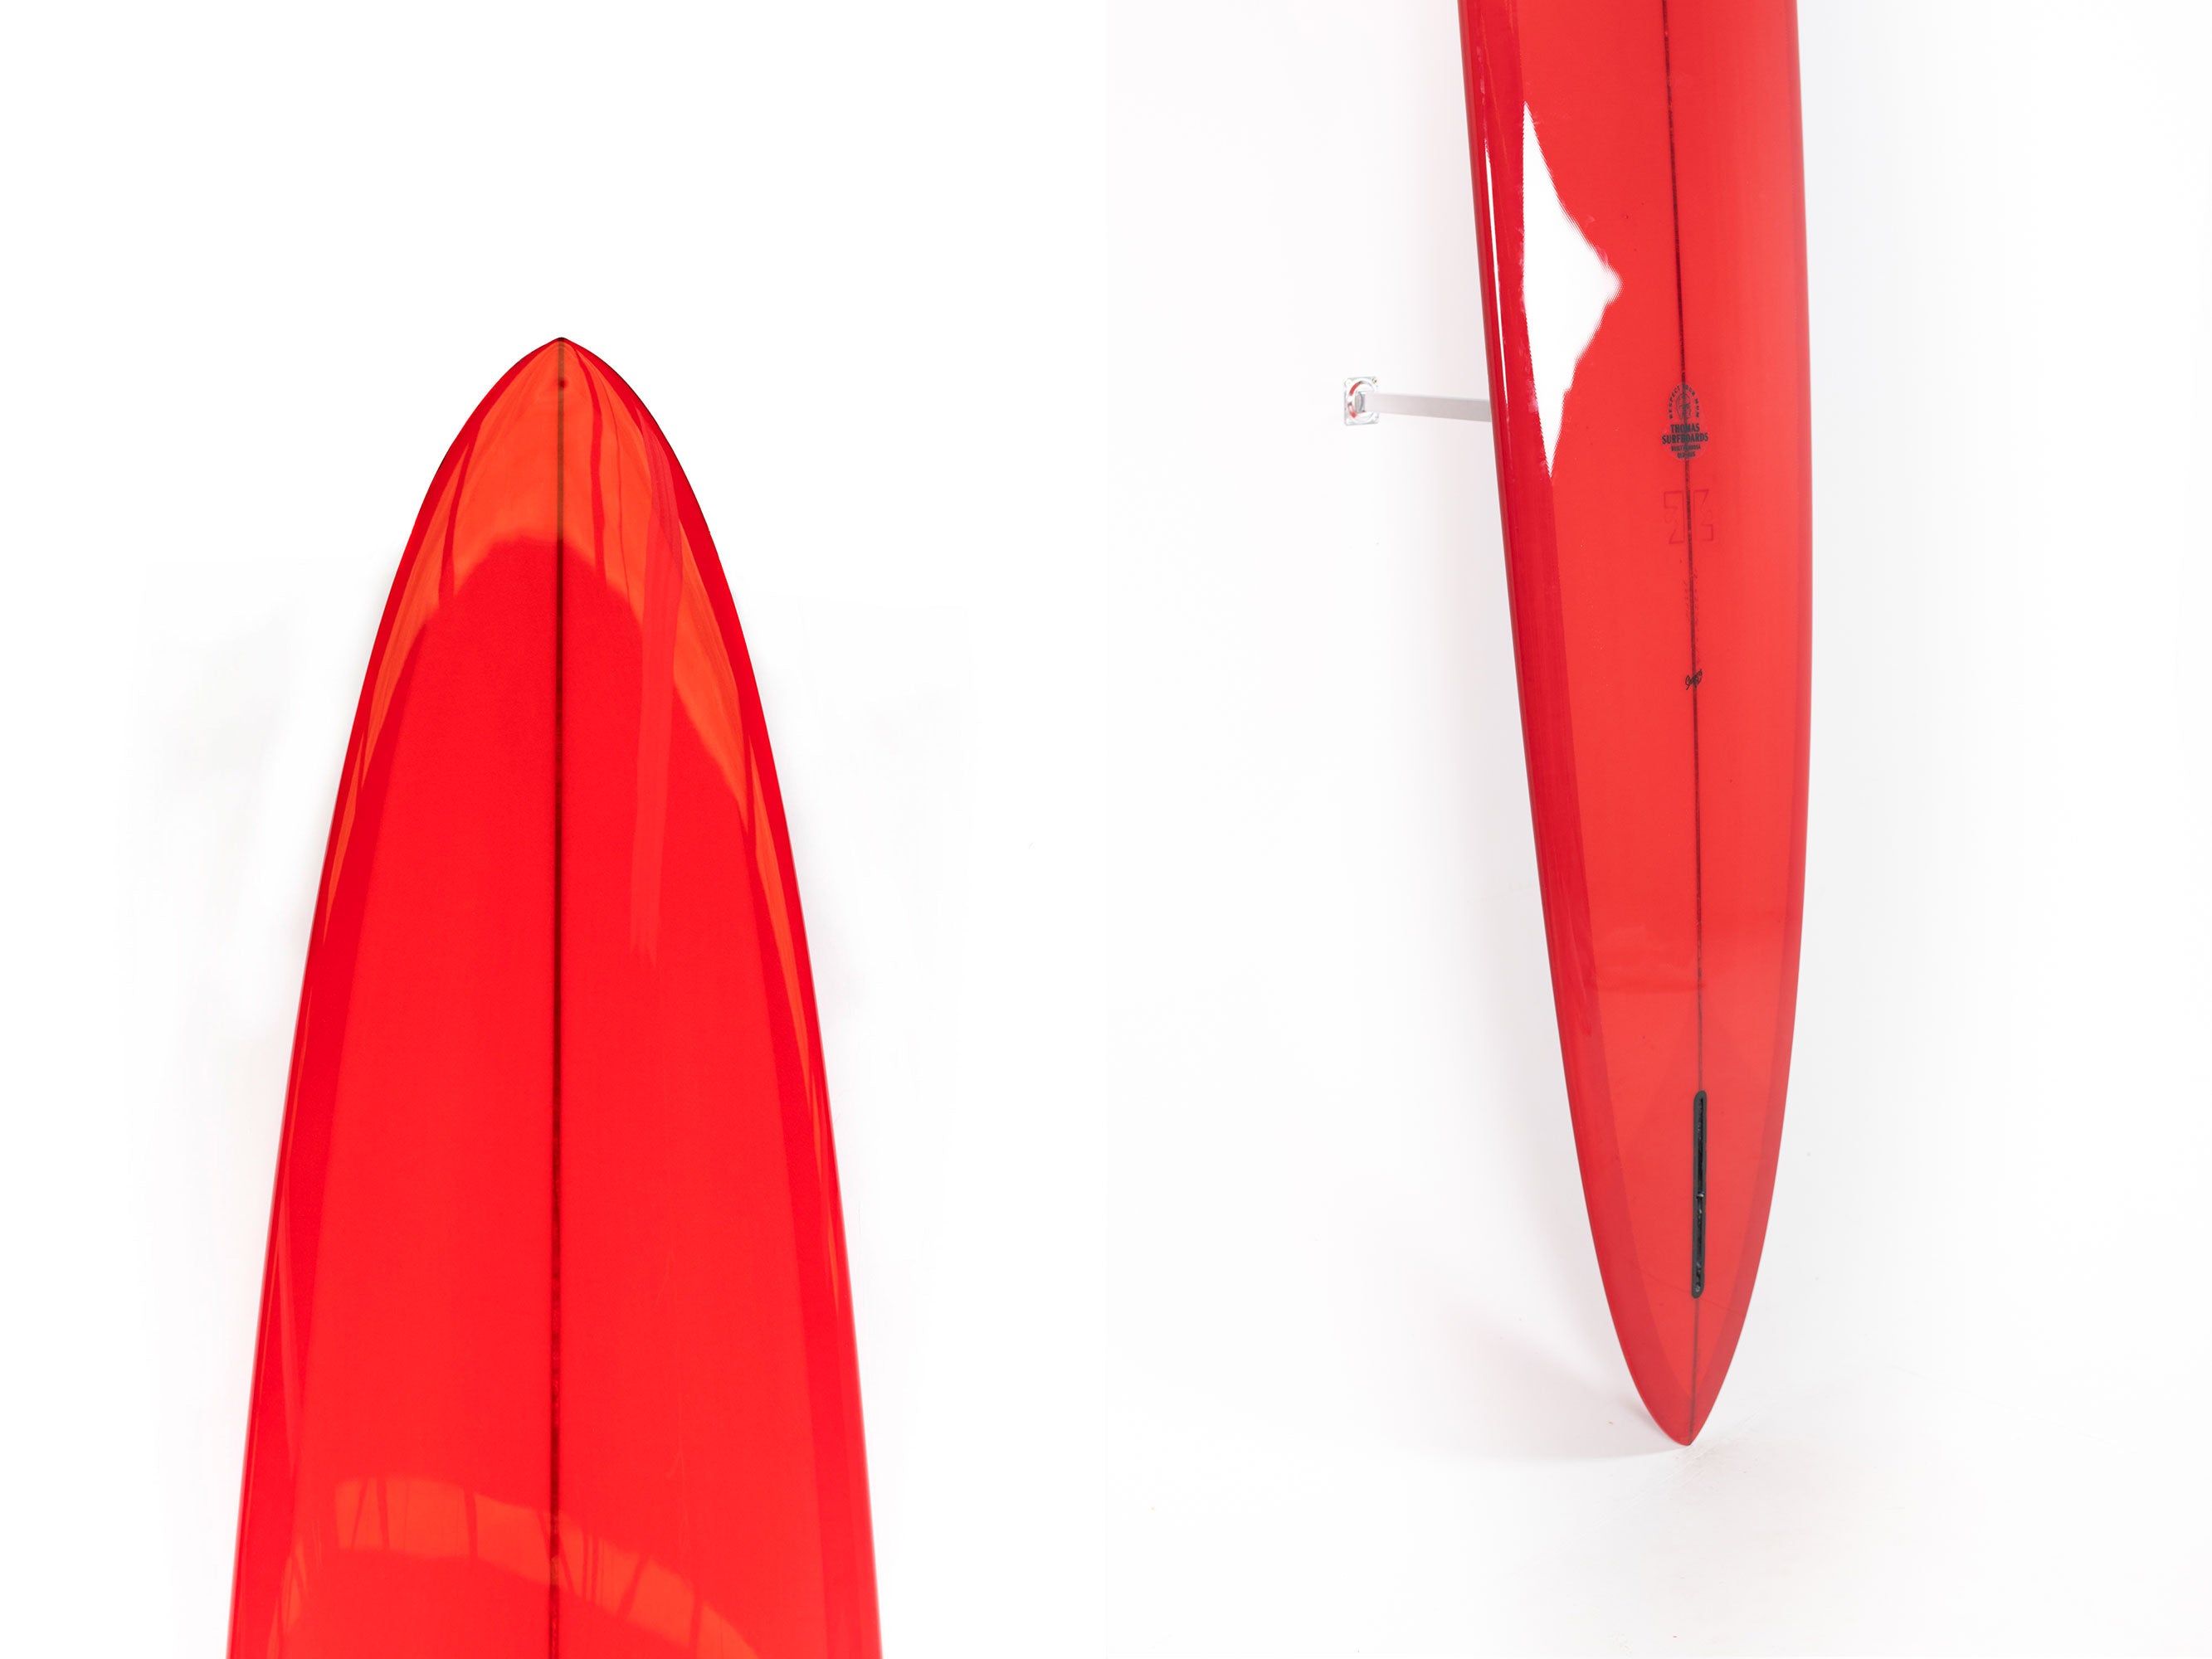 Pukas Surf Shop - Thomas Surfboards